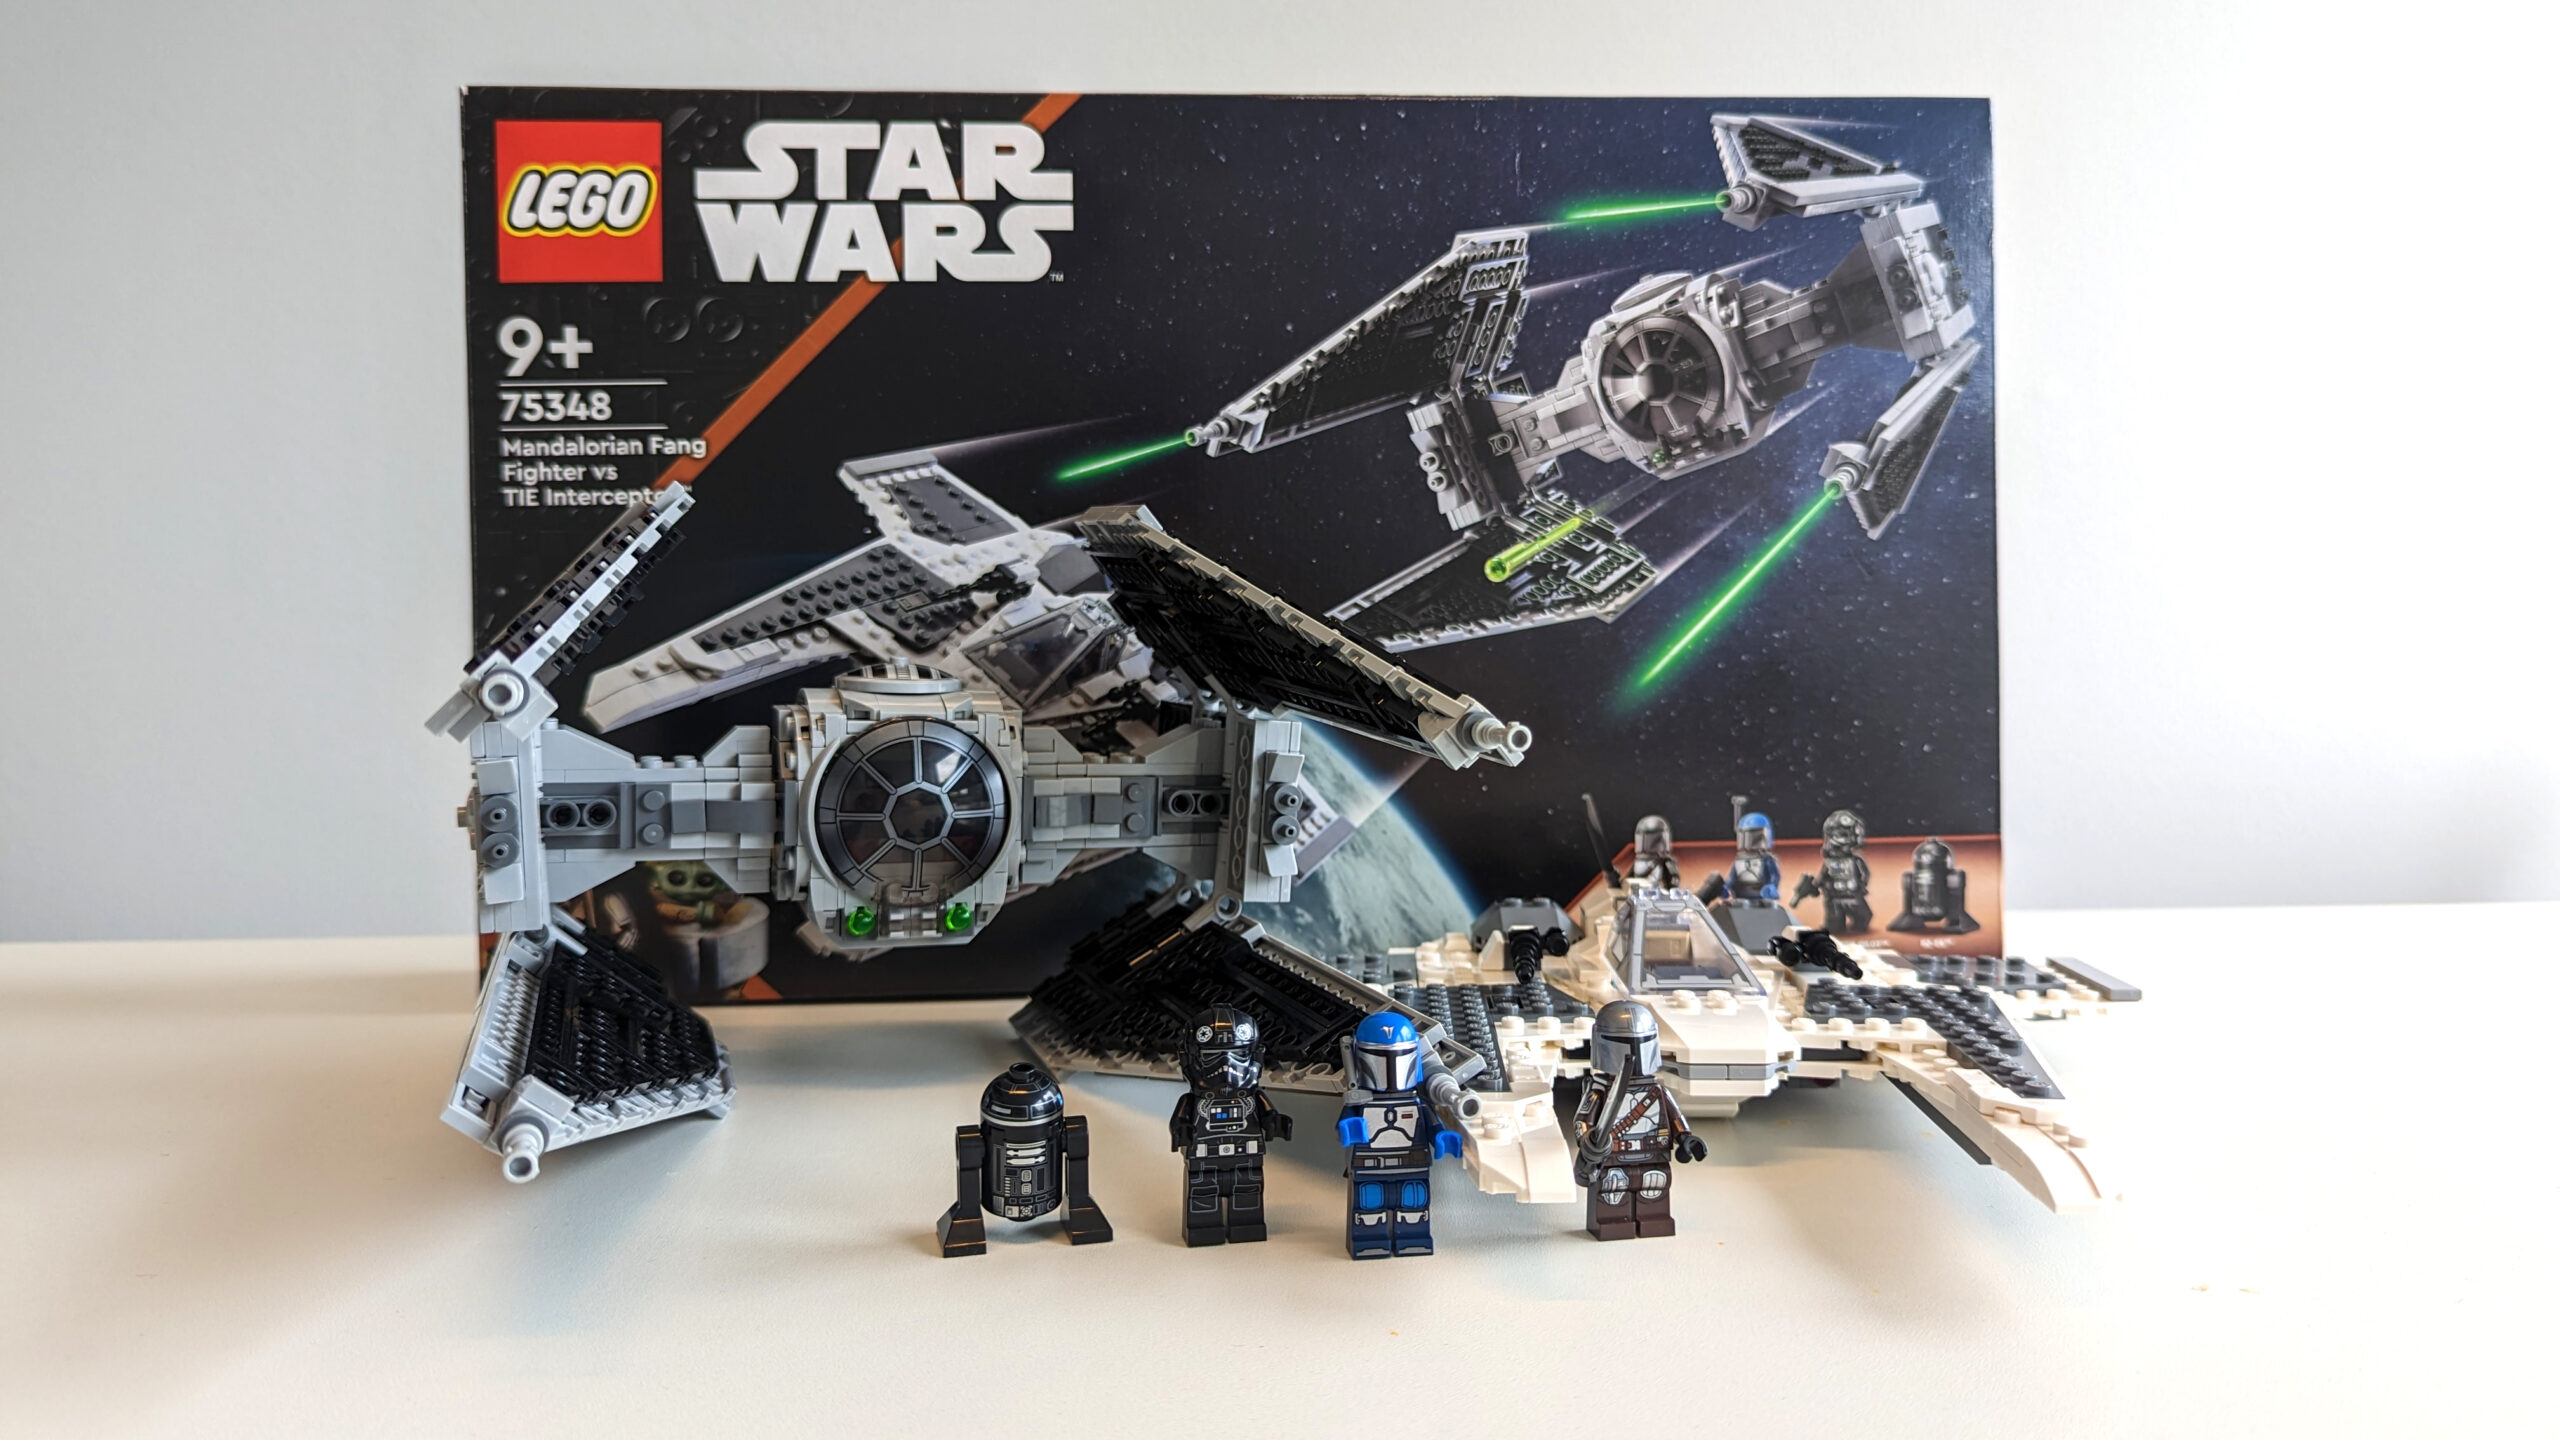 Frontansicht des LEGO 75348 Star Wars Mandalorianischer Fang Fighter vs. TIE Interceptor Set (Foto: Testsieger.de)